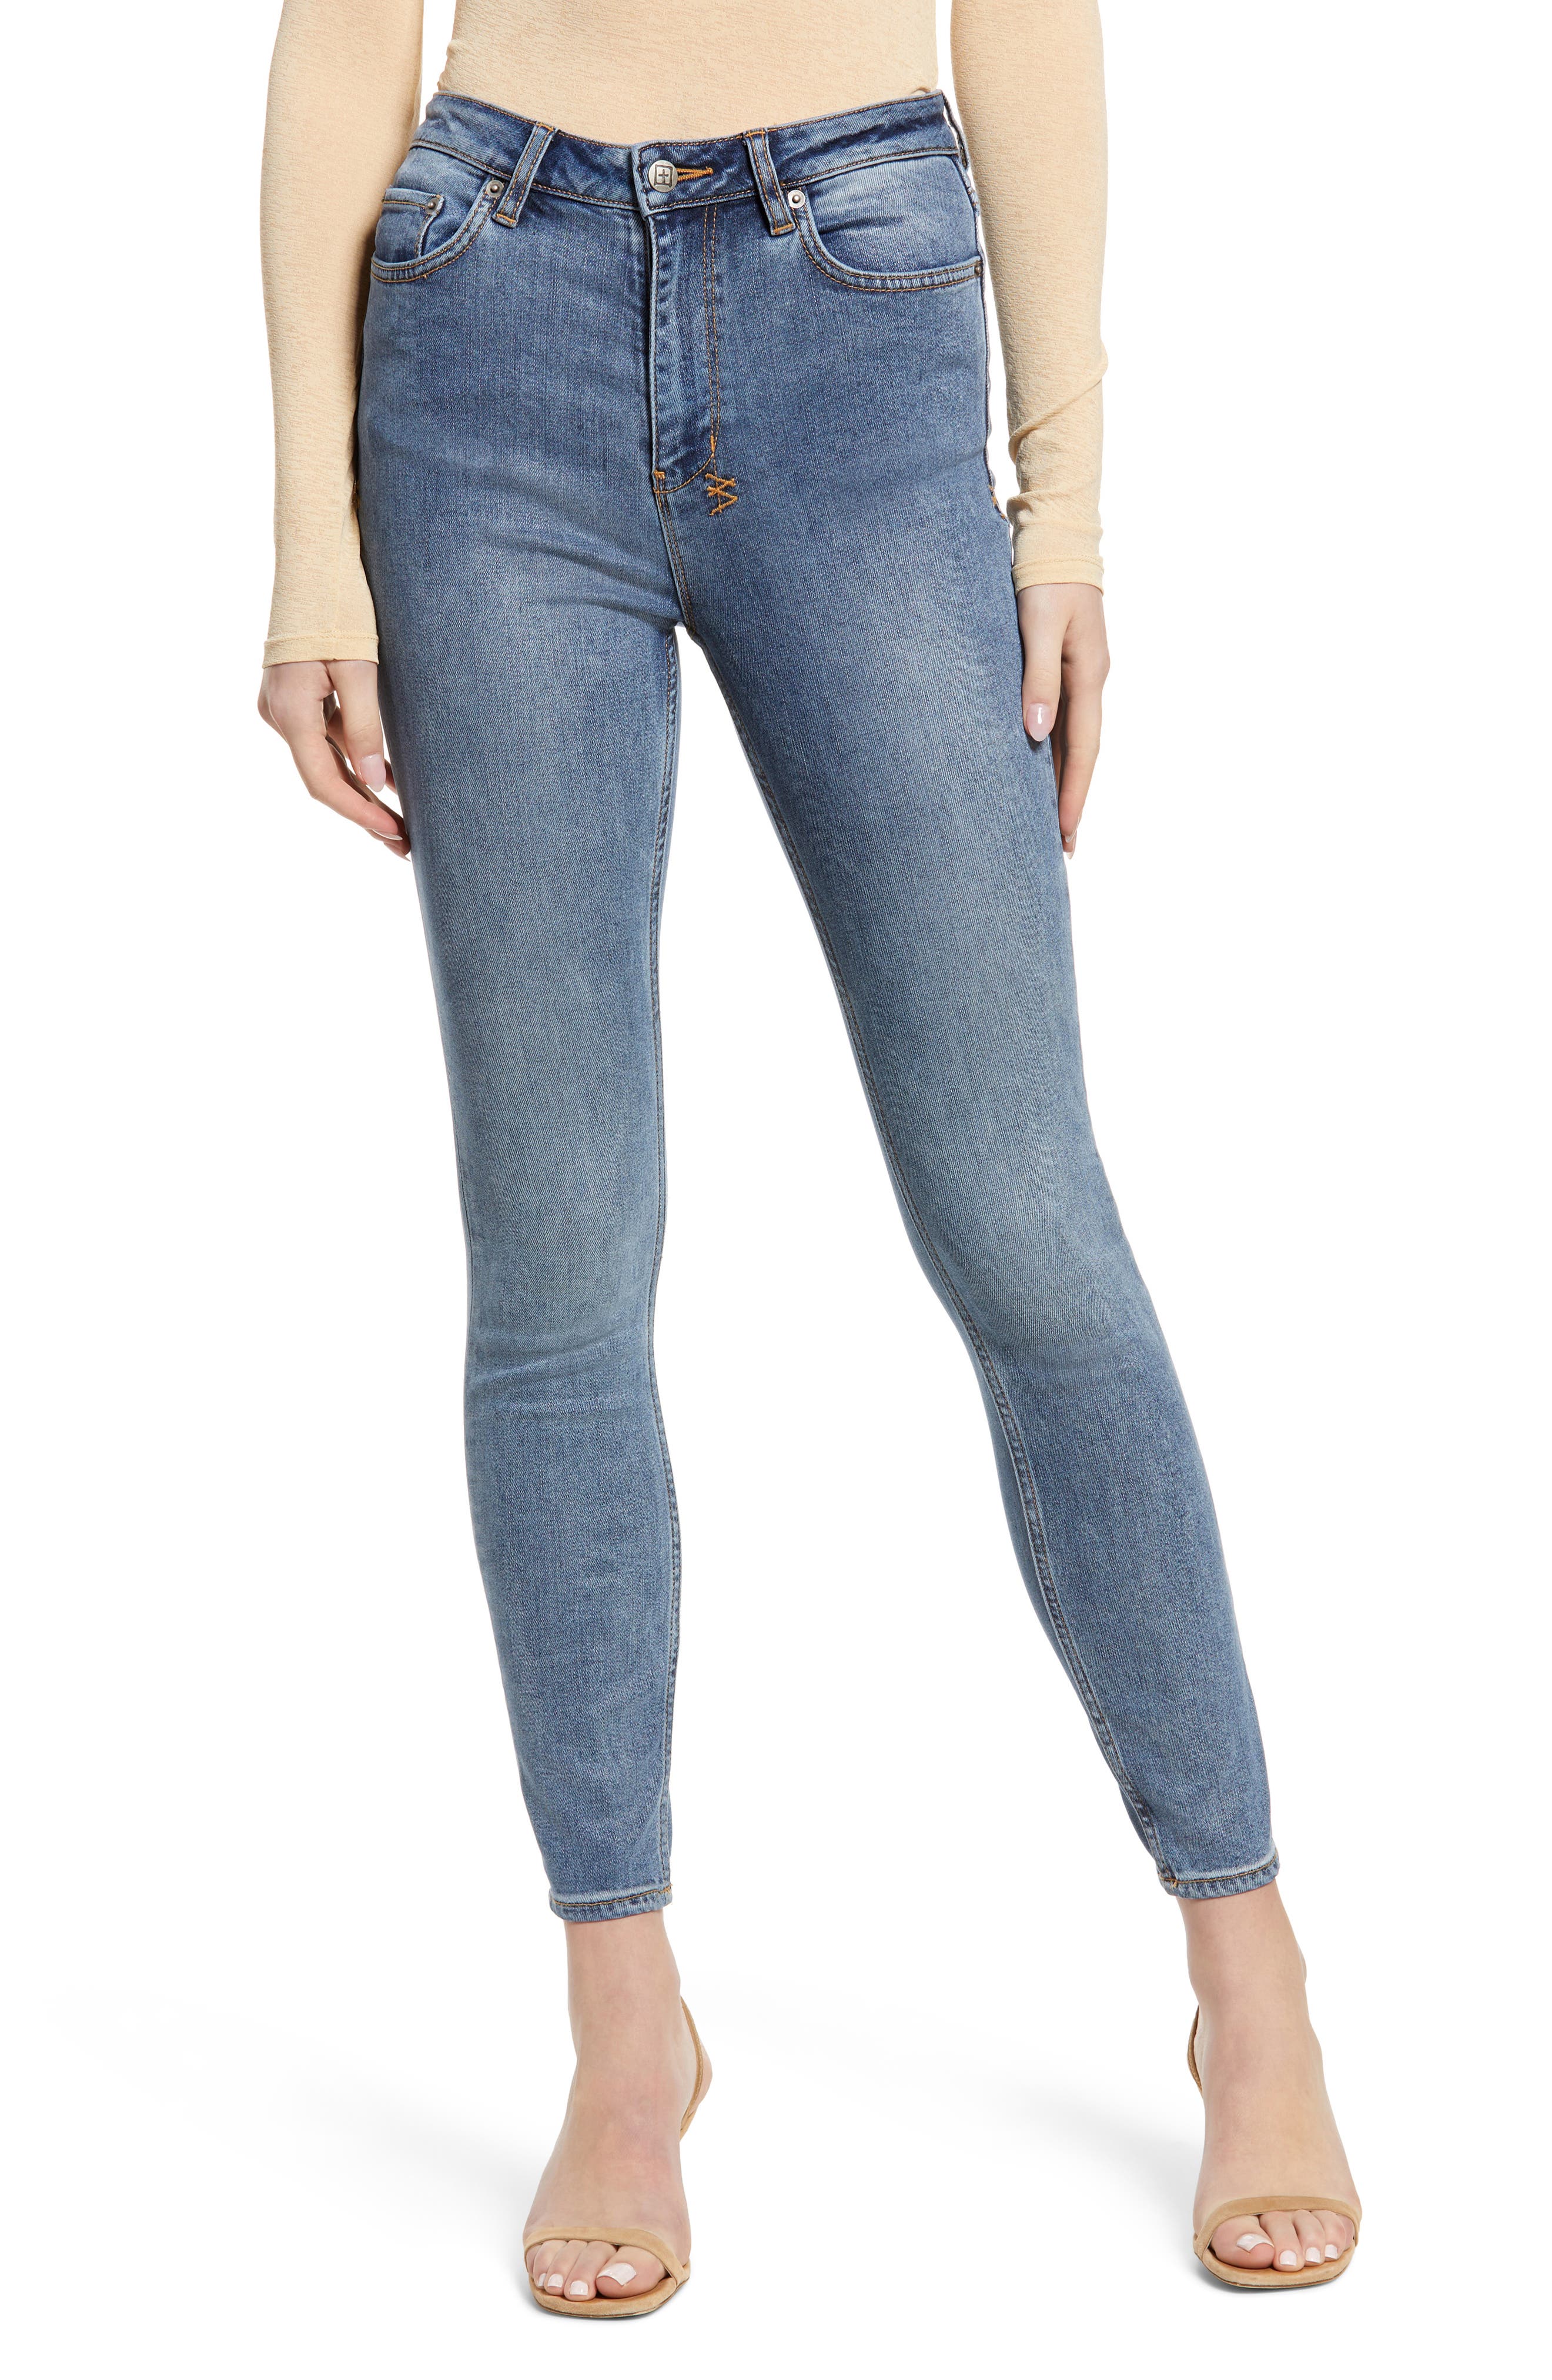 Ksubi High Waist Super Skinny Jeans in Denim at Nordstrom, Size 26